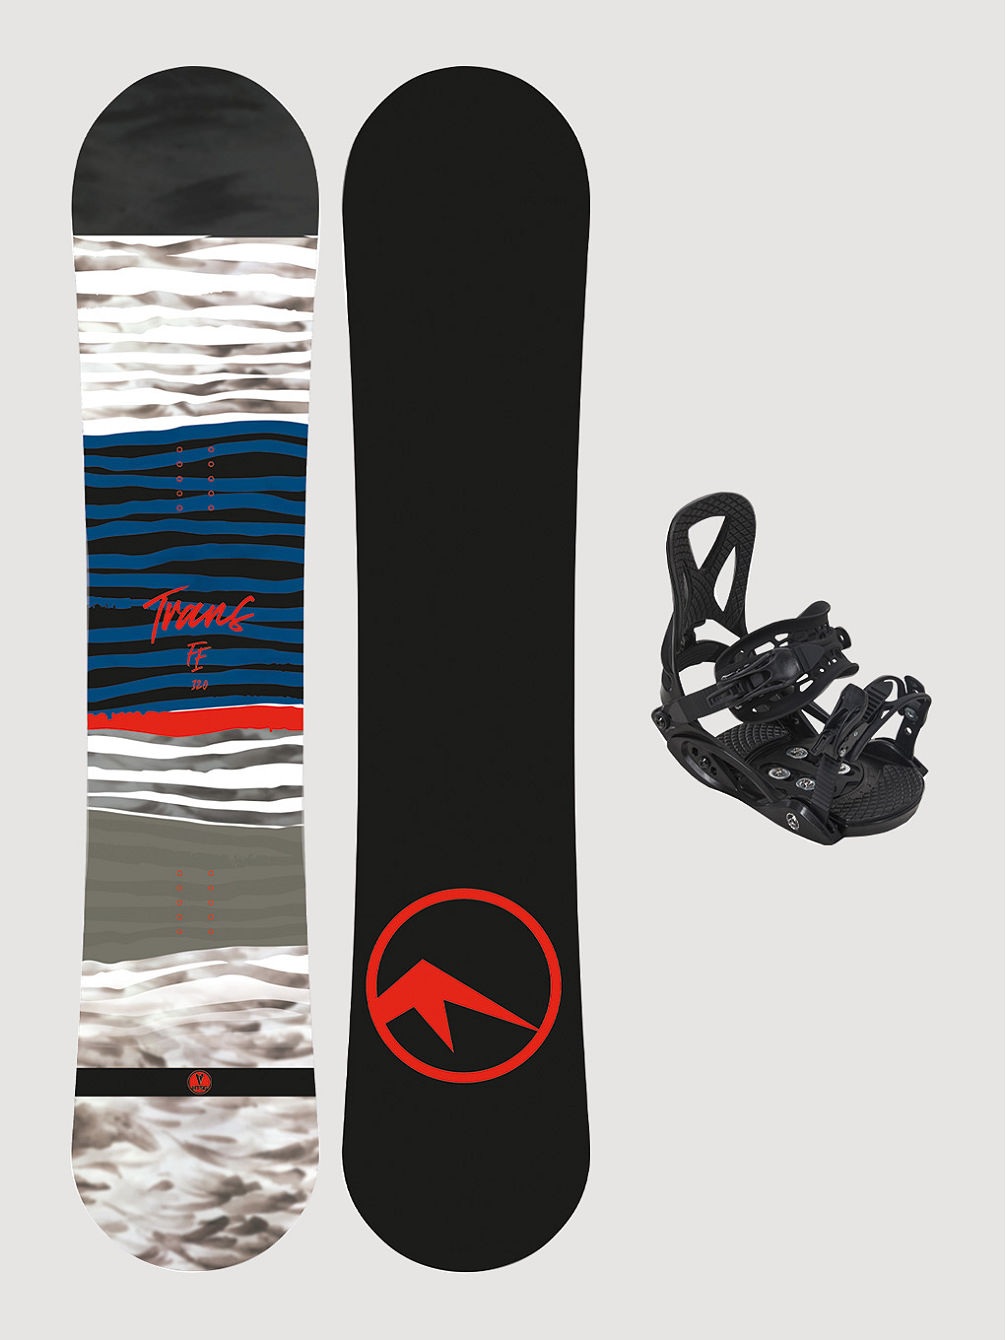 Fe 125 + Pure M Snowboardpakke